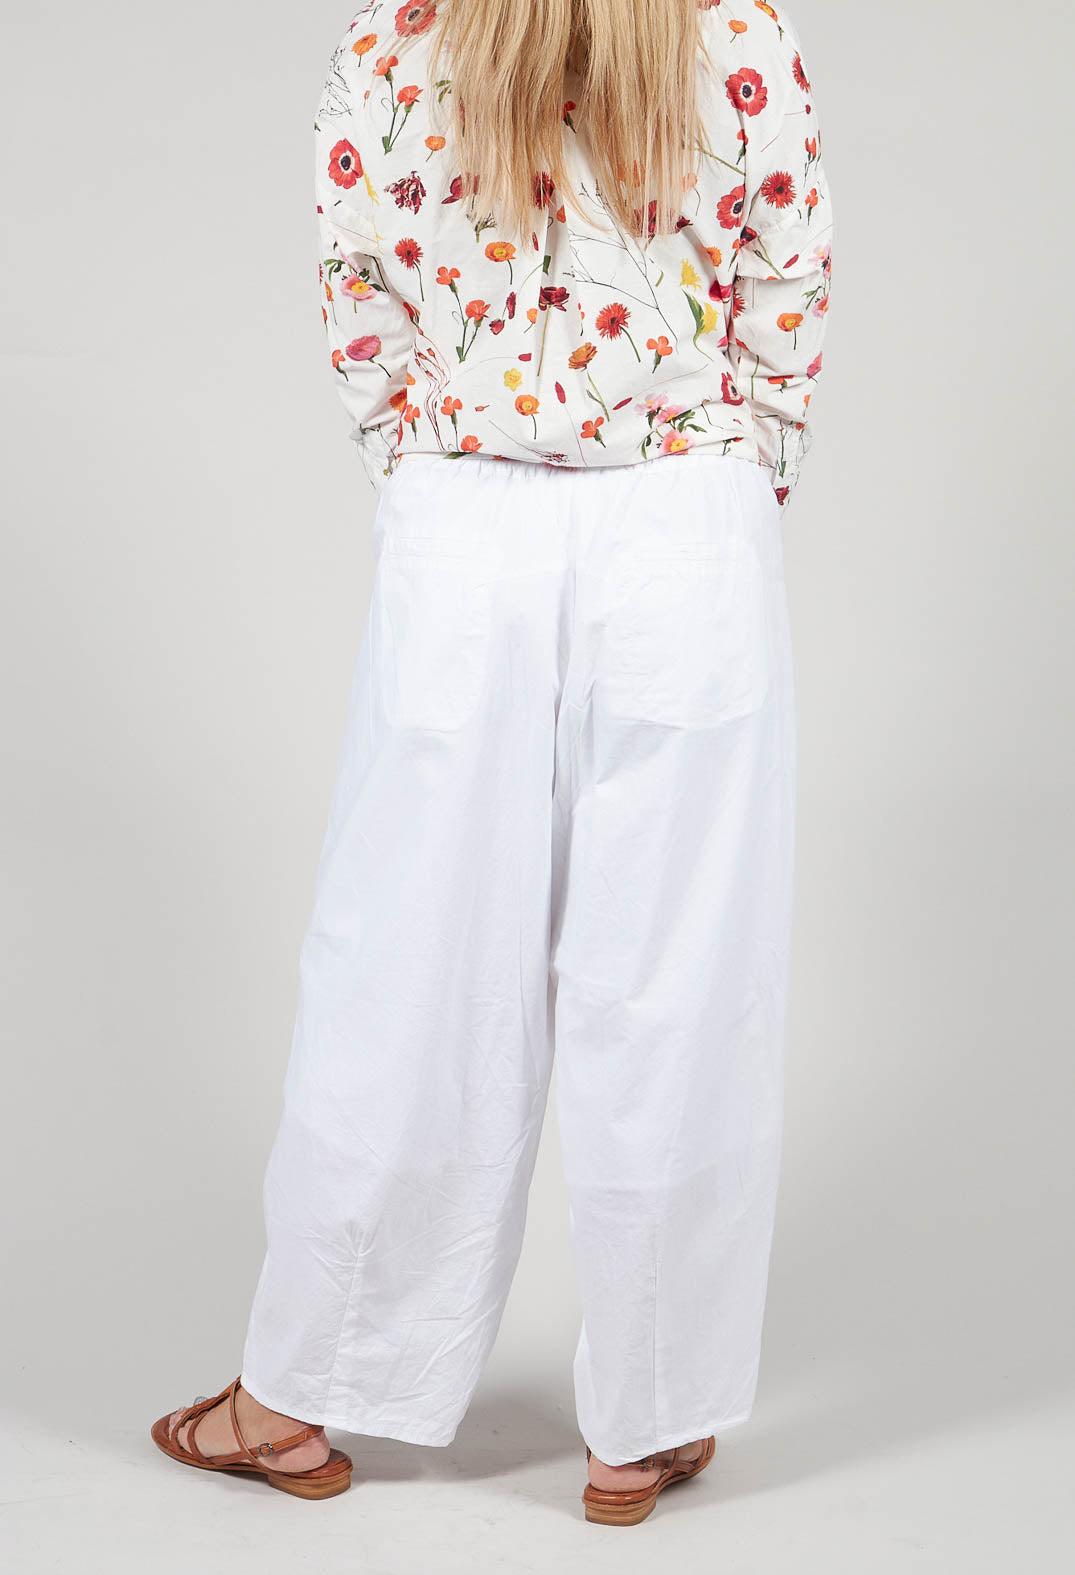 Prudentia Trousers in White